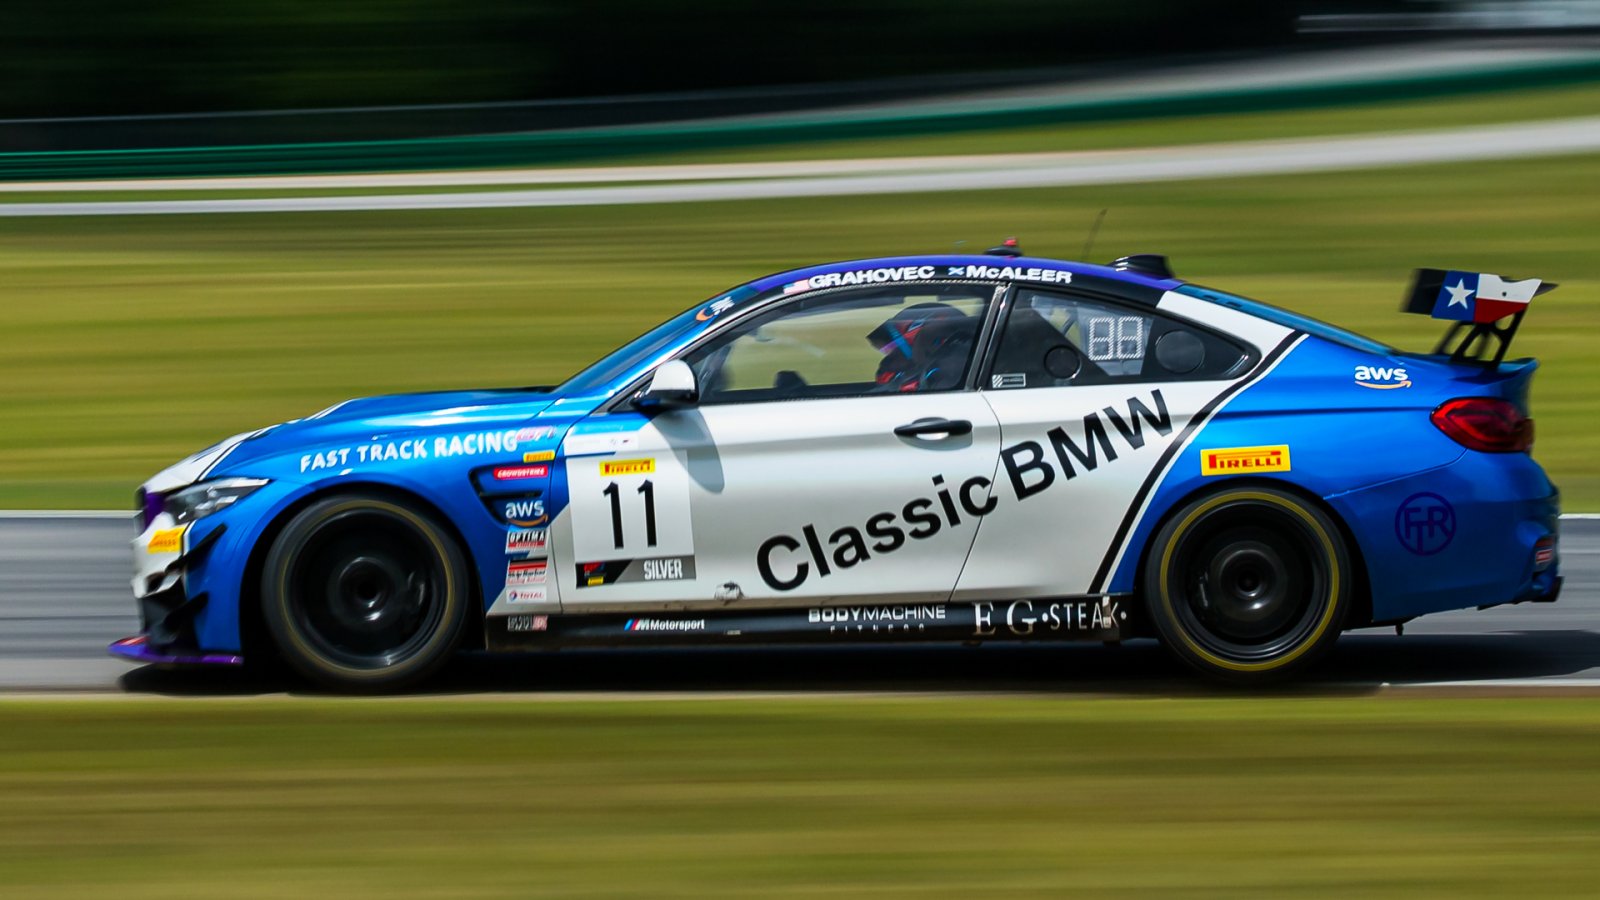 Toby Grahovec & Stevan McAleer Win Pirelli GT4 America SprintX Silver Class Sunday in #11 Fast Track Racing/Classic BMW BMW M4 